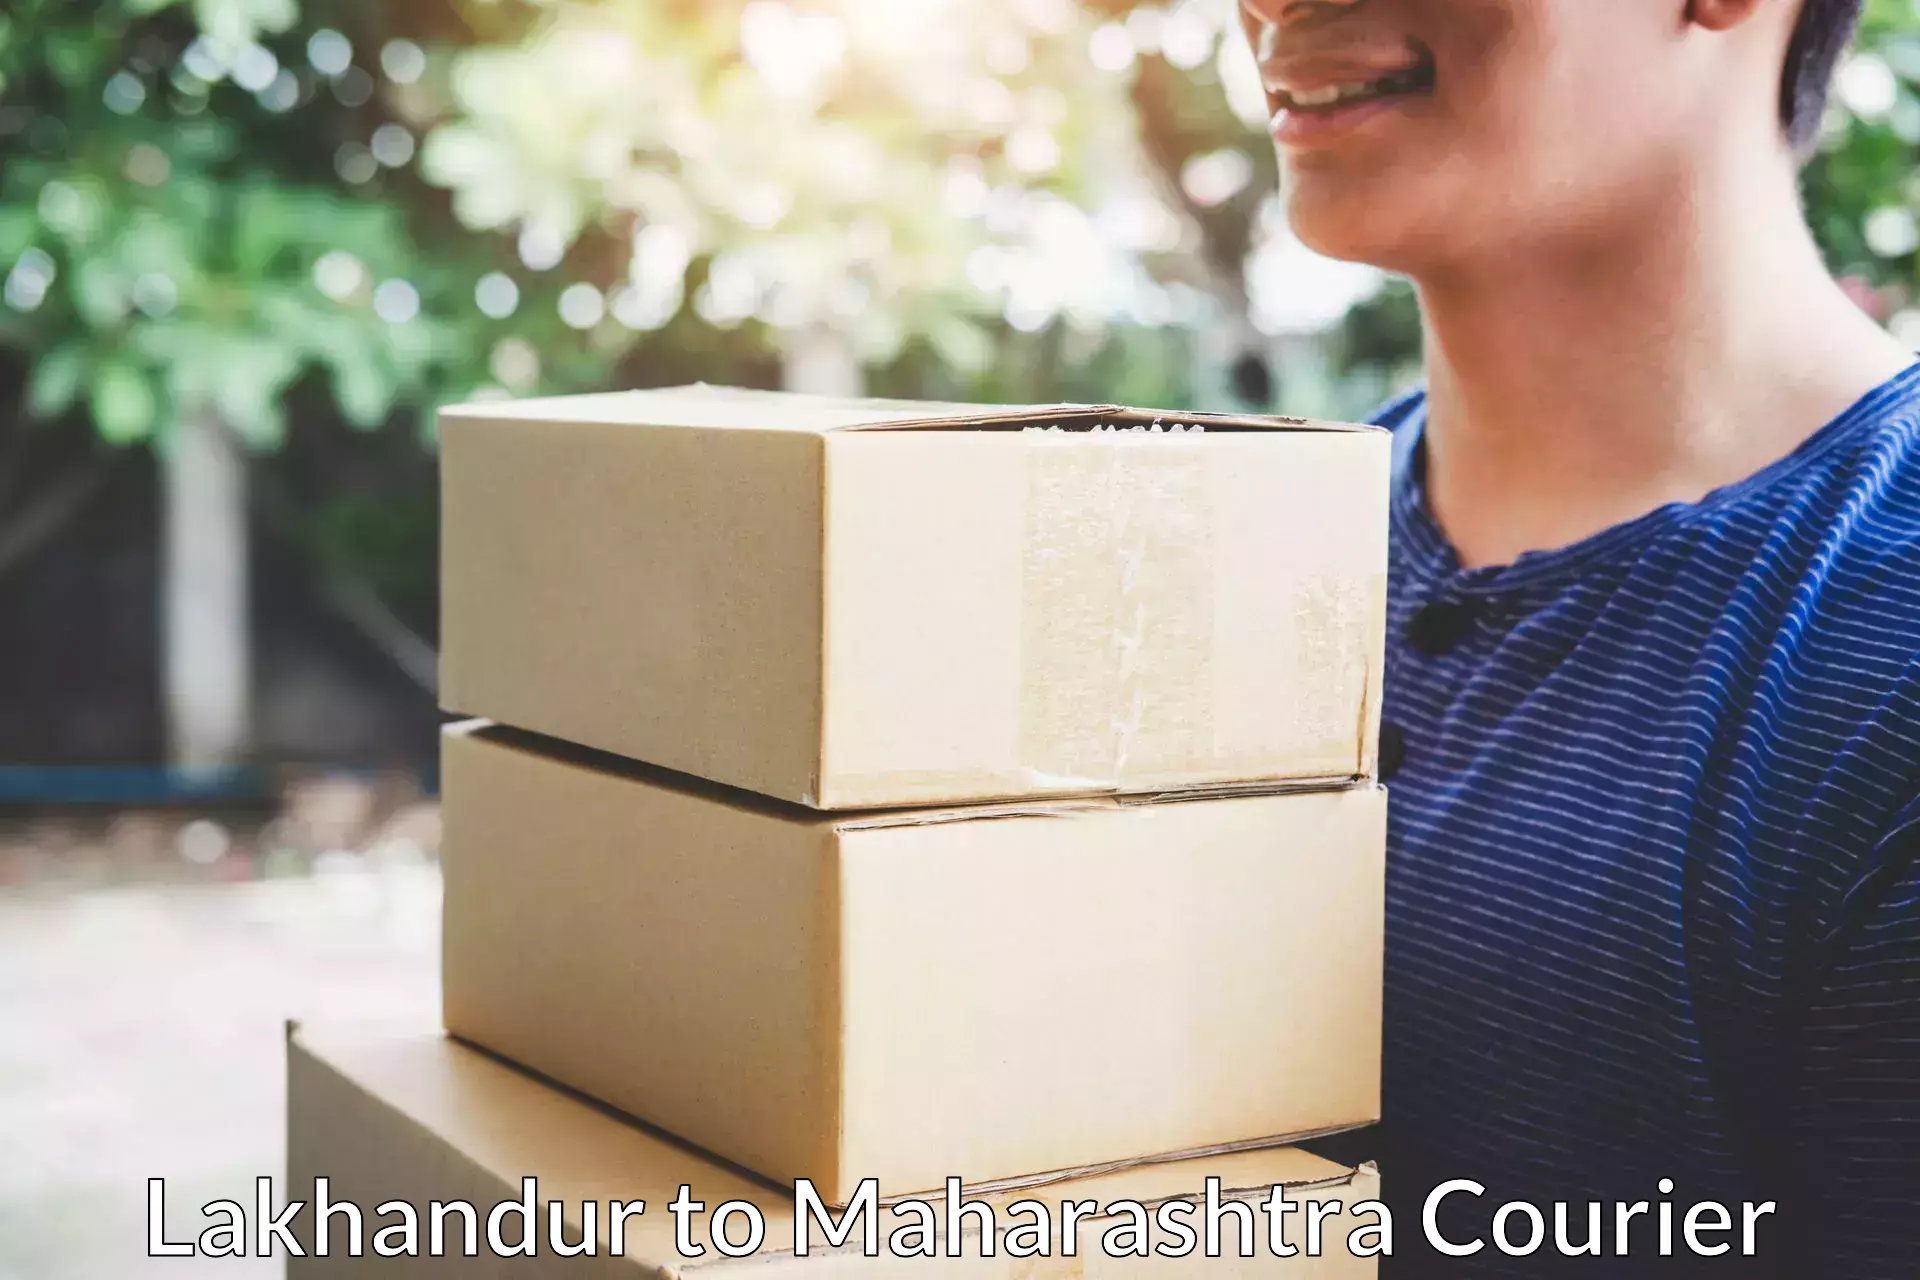 Furniture relocation experts Lakhandur to Maharashtra